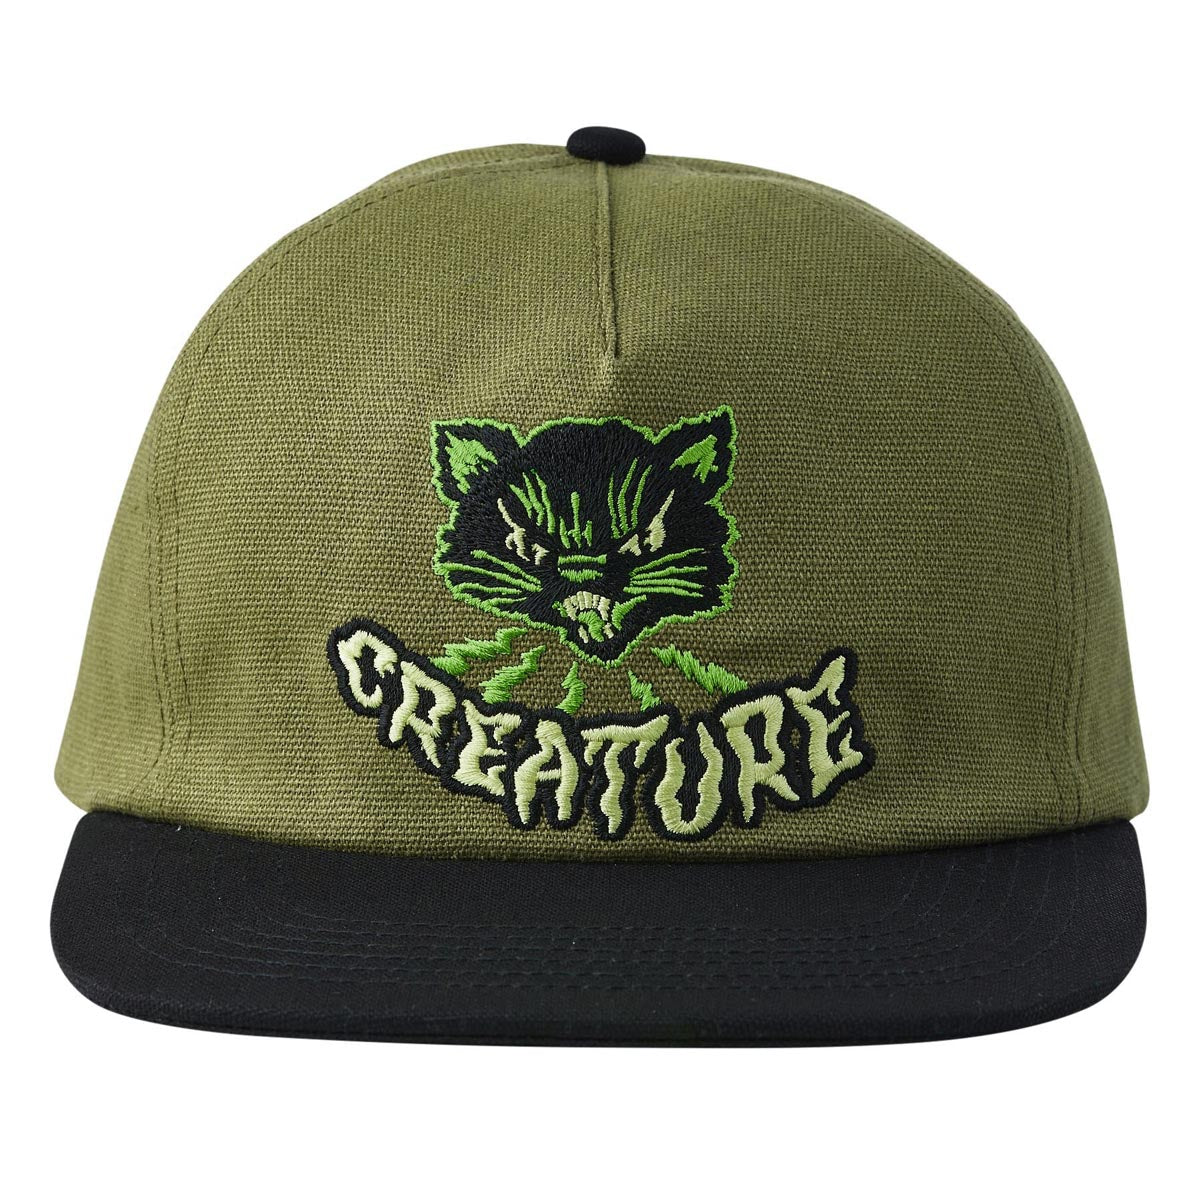 Creature The Creeper Strapback Hat - Olive/Black image 3